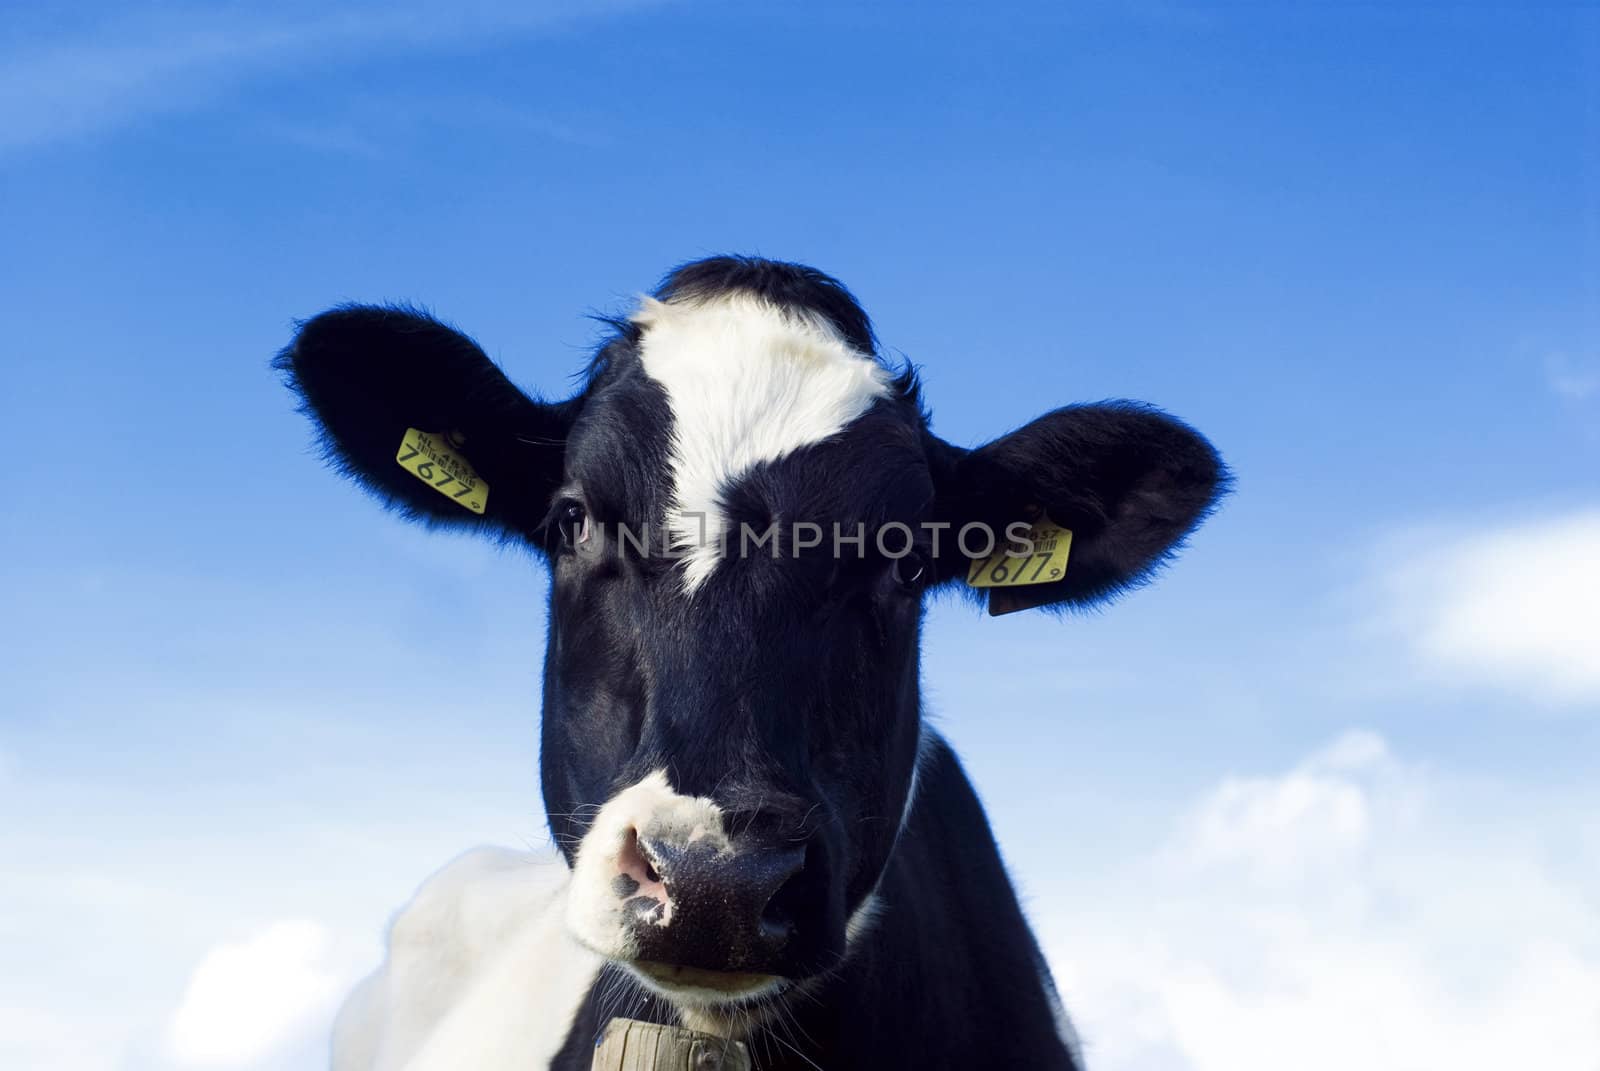 Dutch black and white cow against a blue sky.